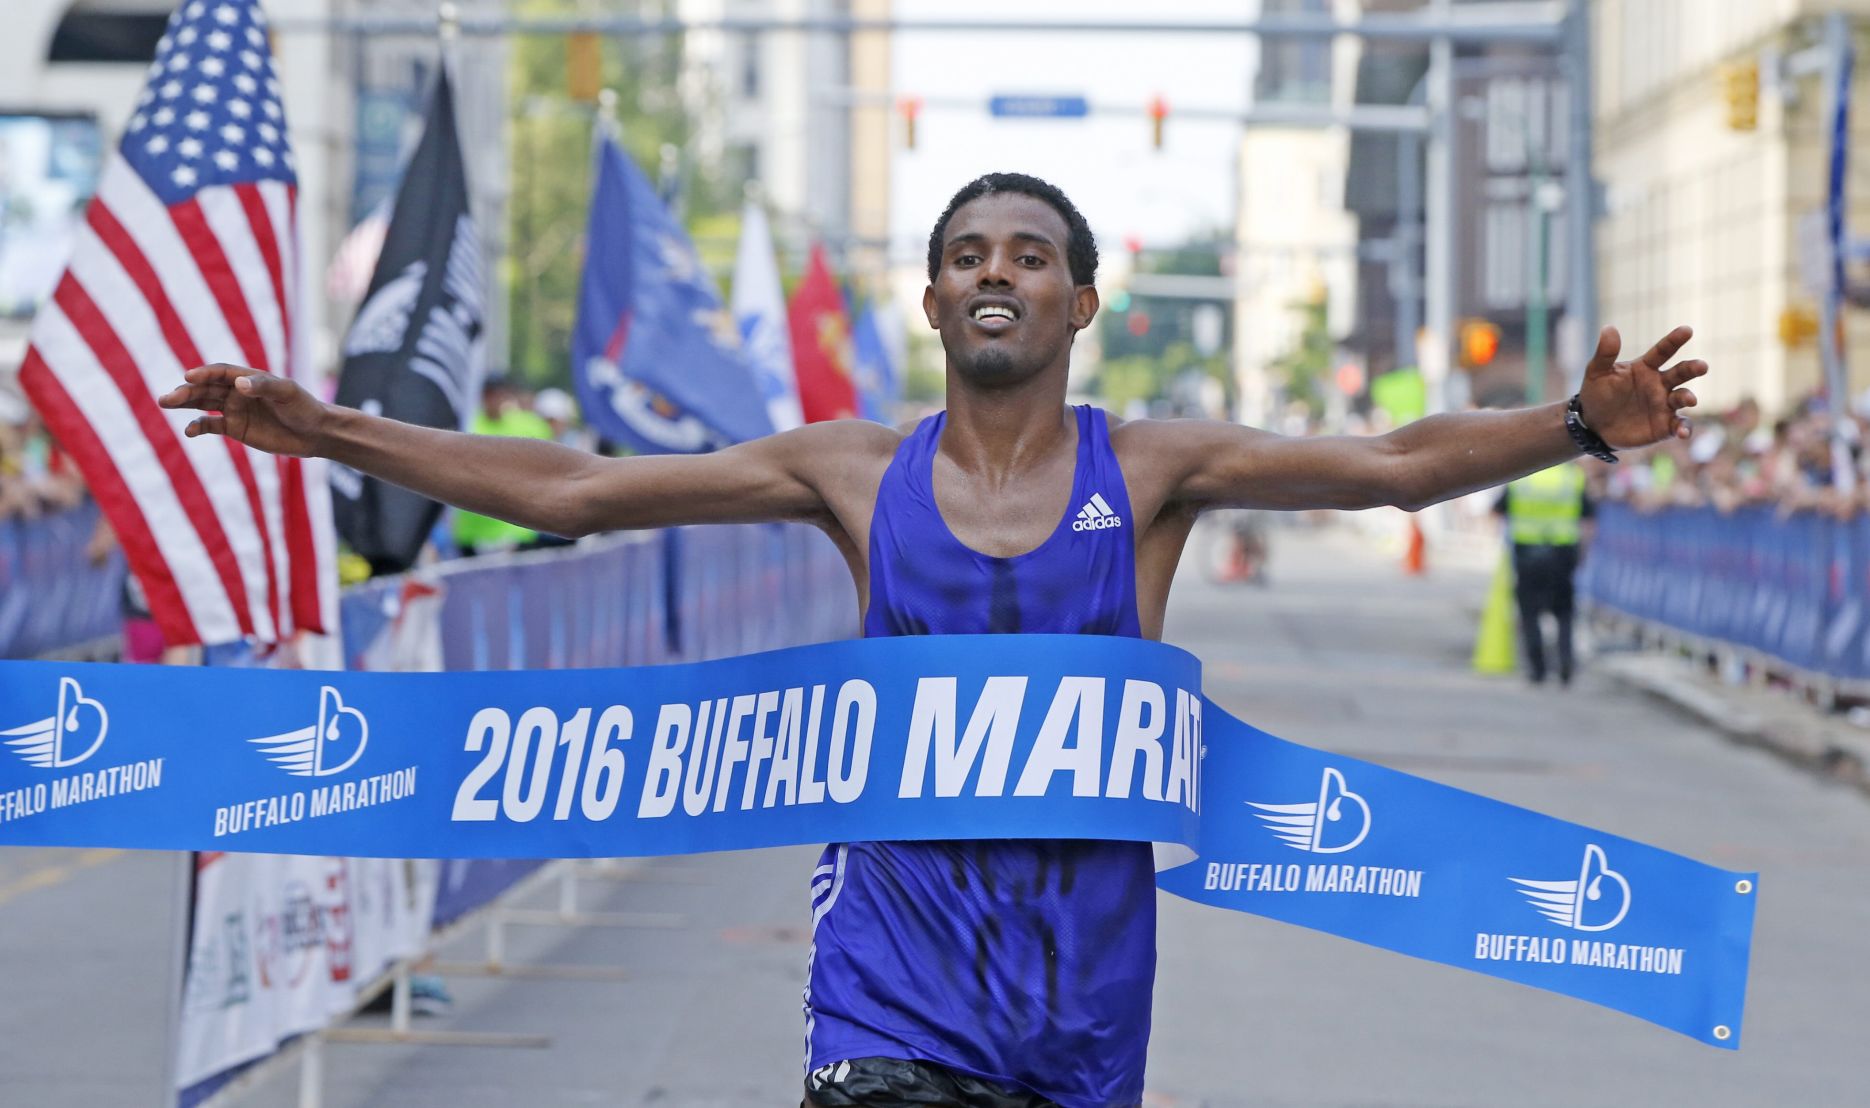 ethiopian marathon runner 196